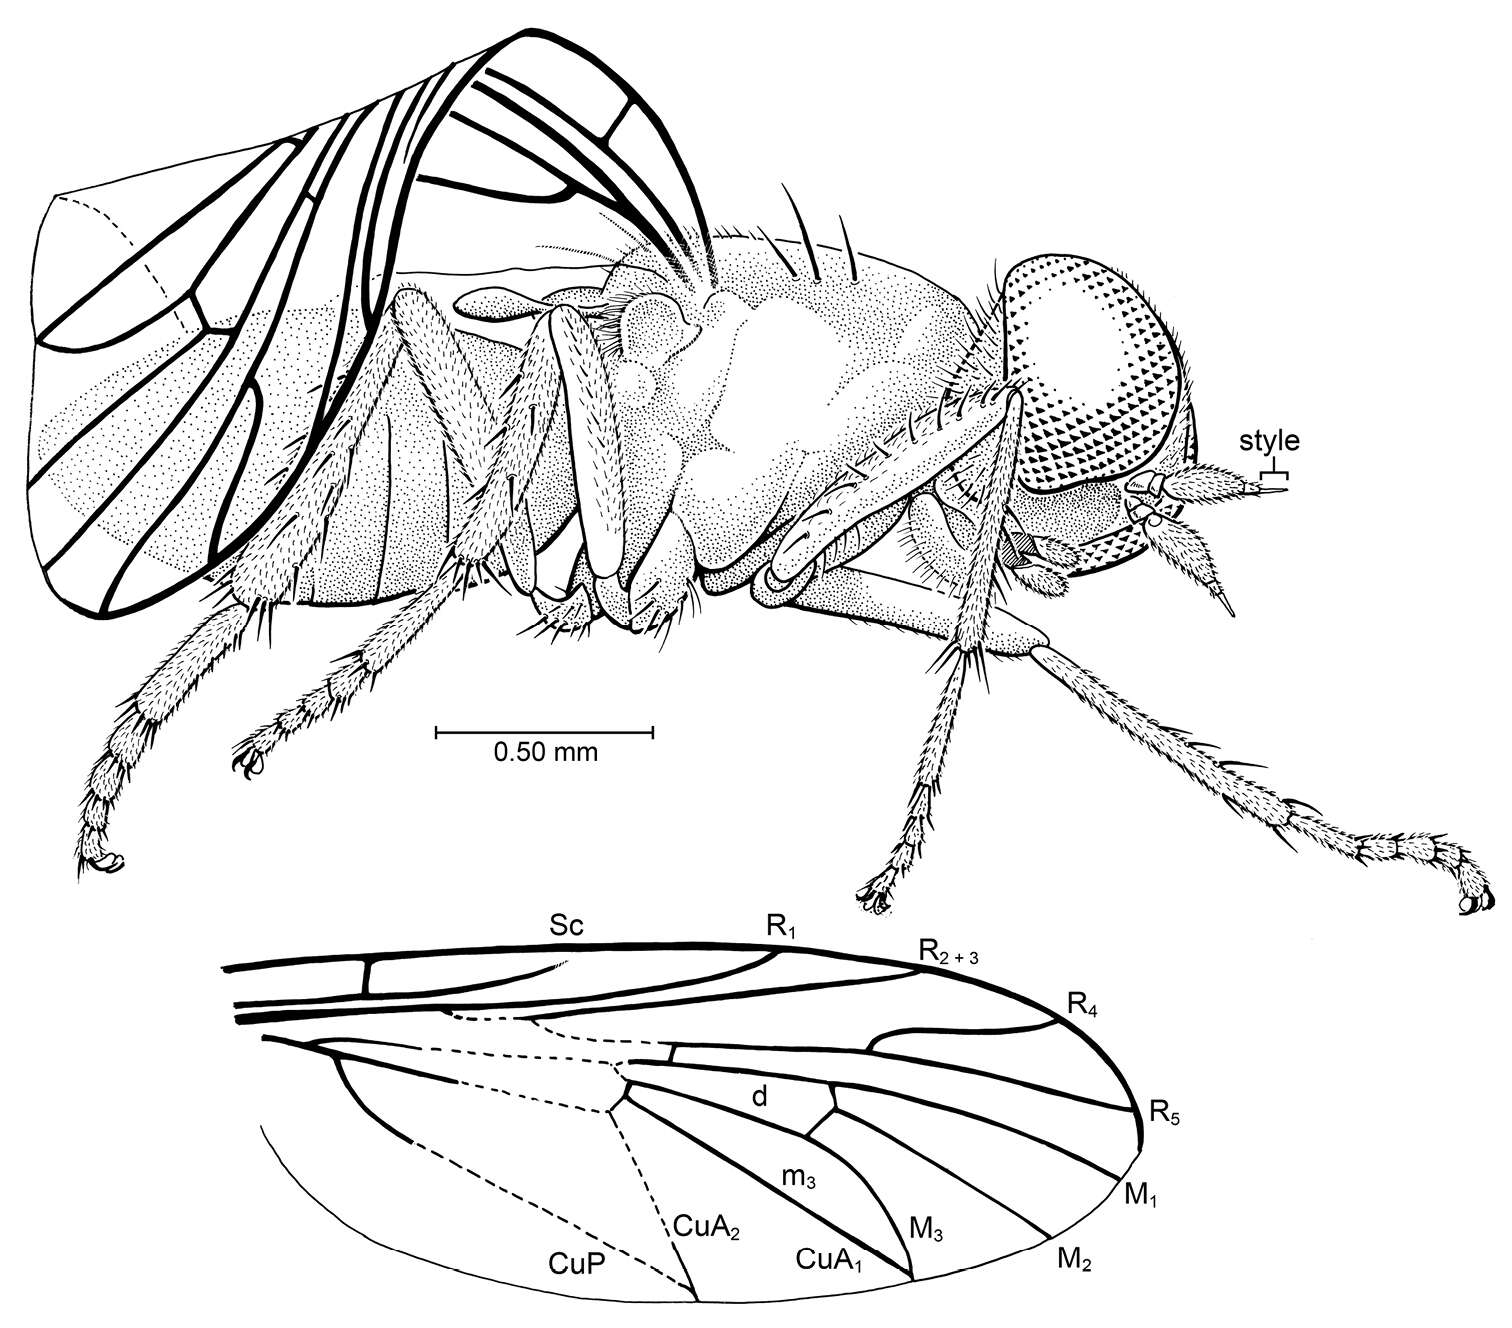 Image of Apsilocephalidae